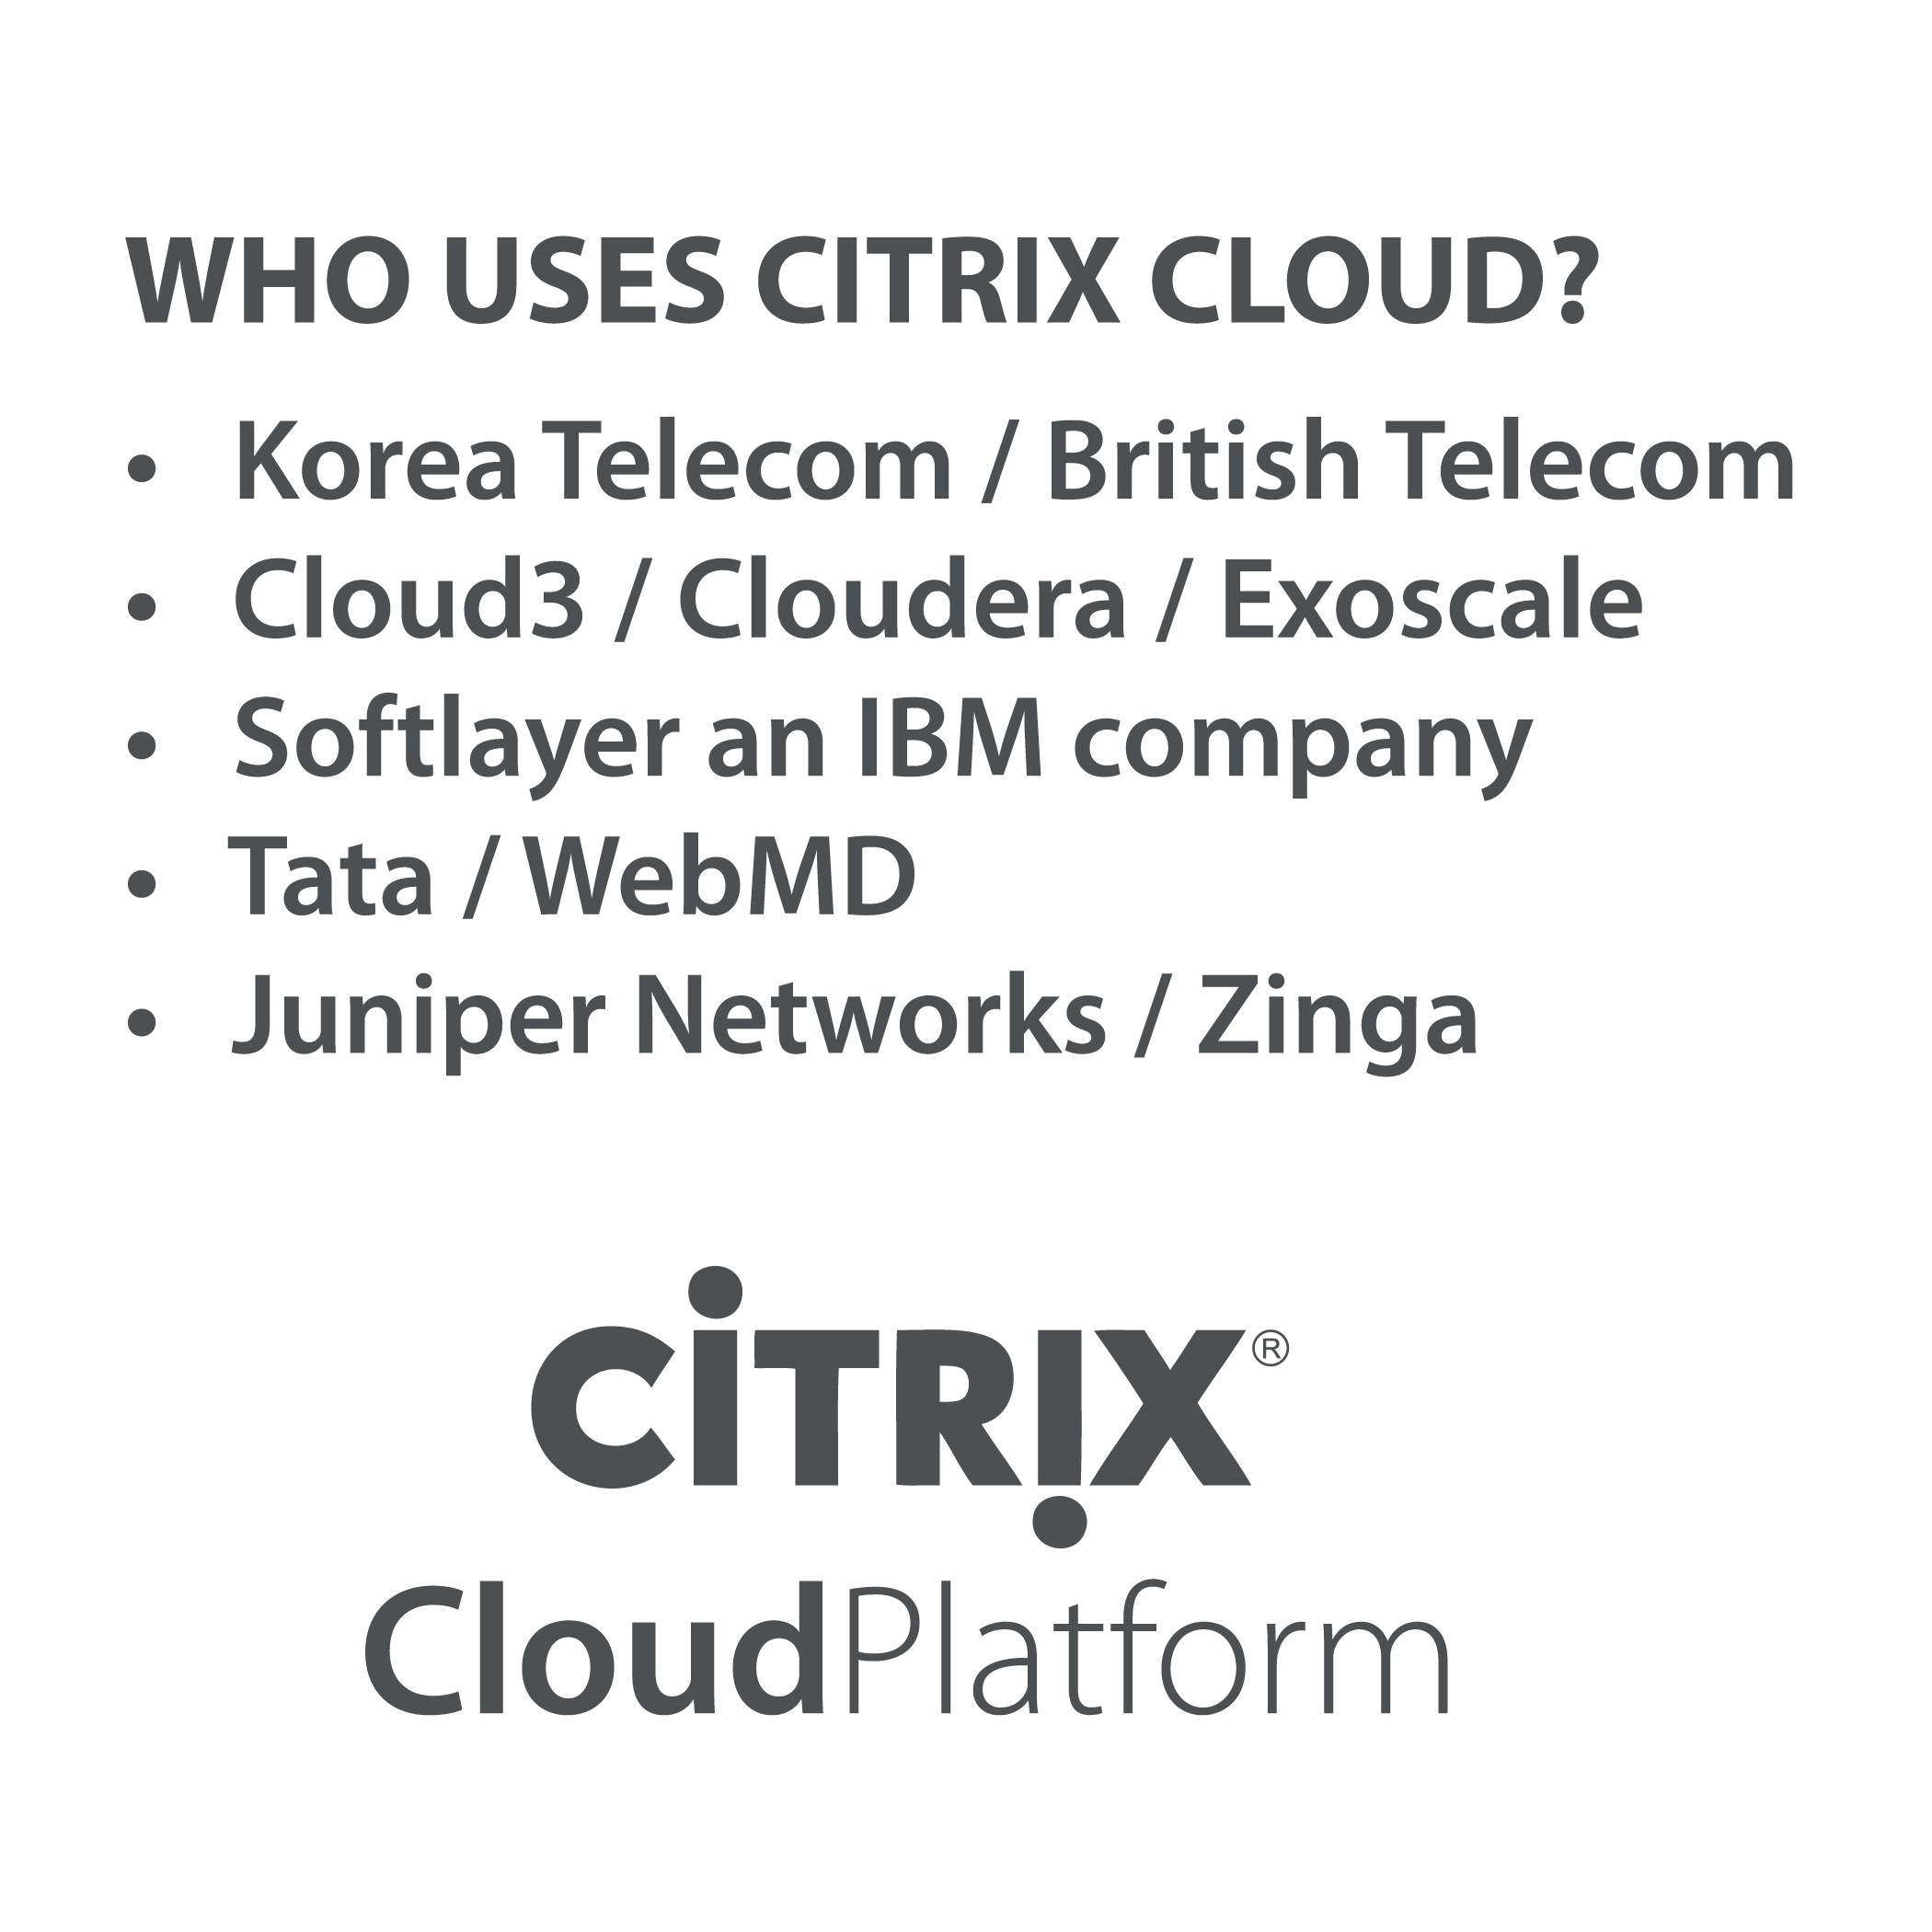 Who uses citrix cloud